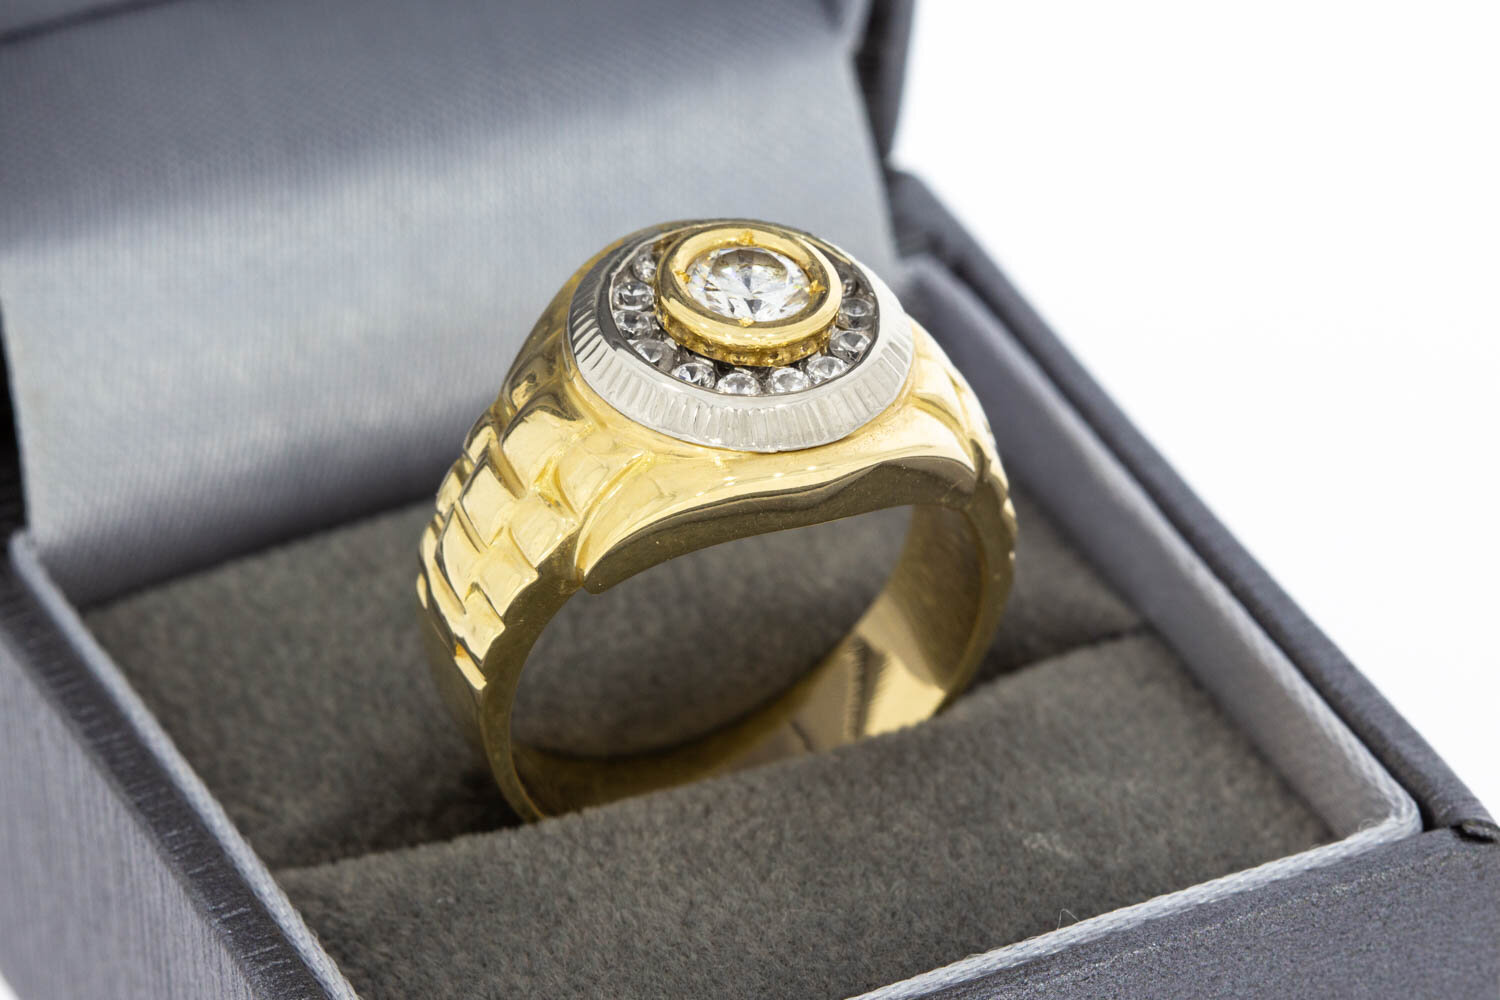 14 Karaat gouden Statement ring - 19,7 mm